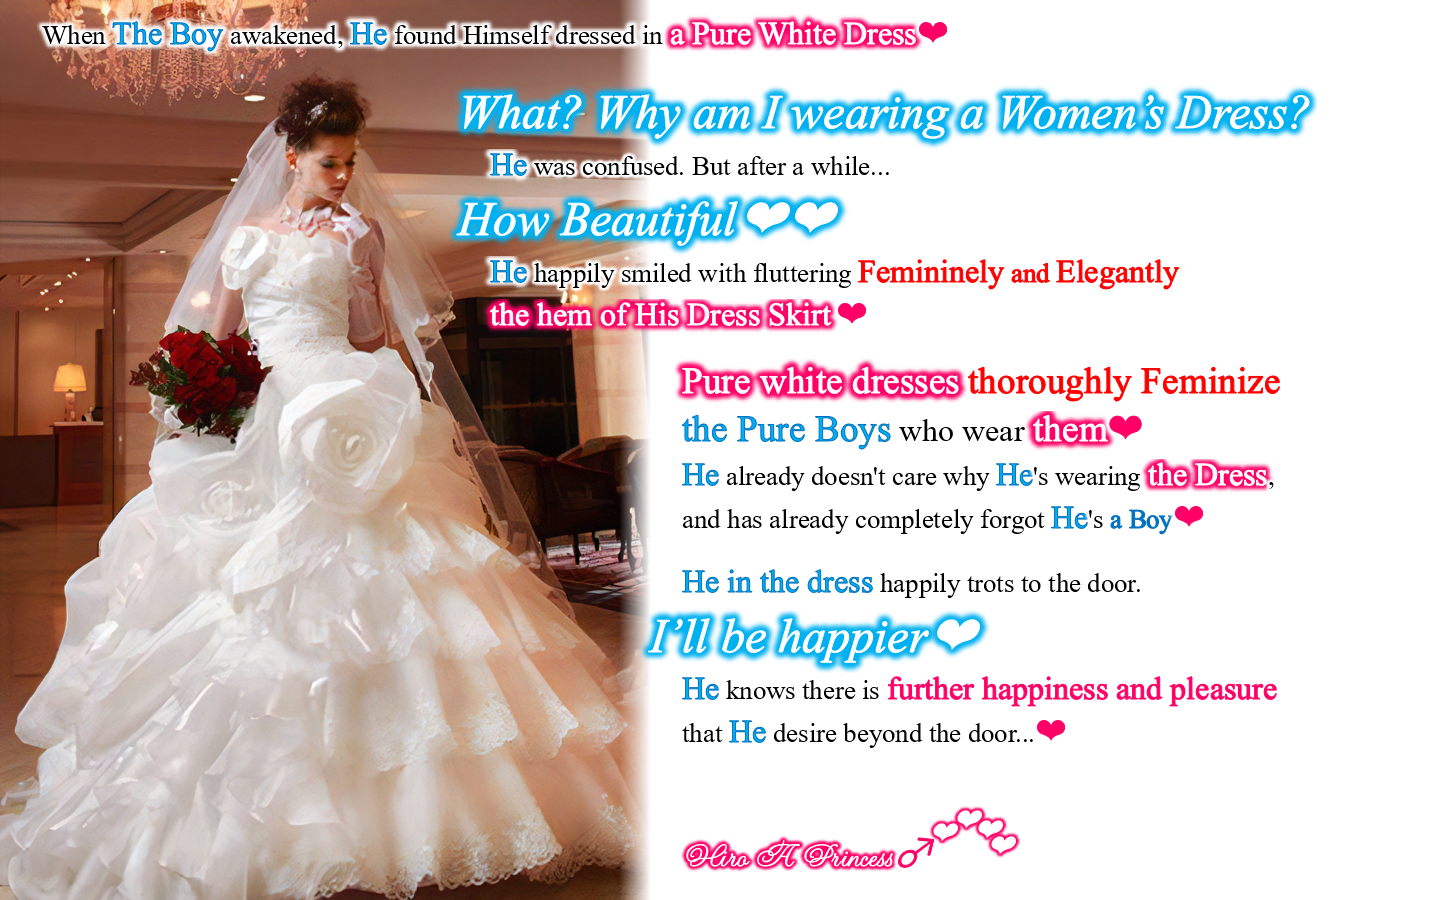 Pure white dresses thoroughly Feminize the Pure Boys who wear them E